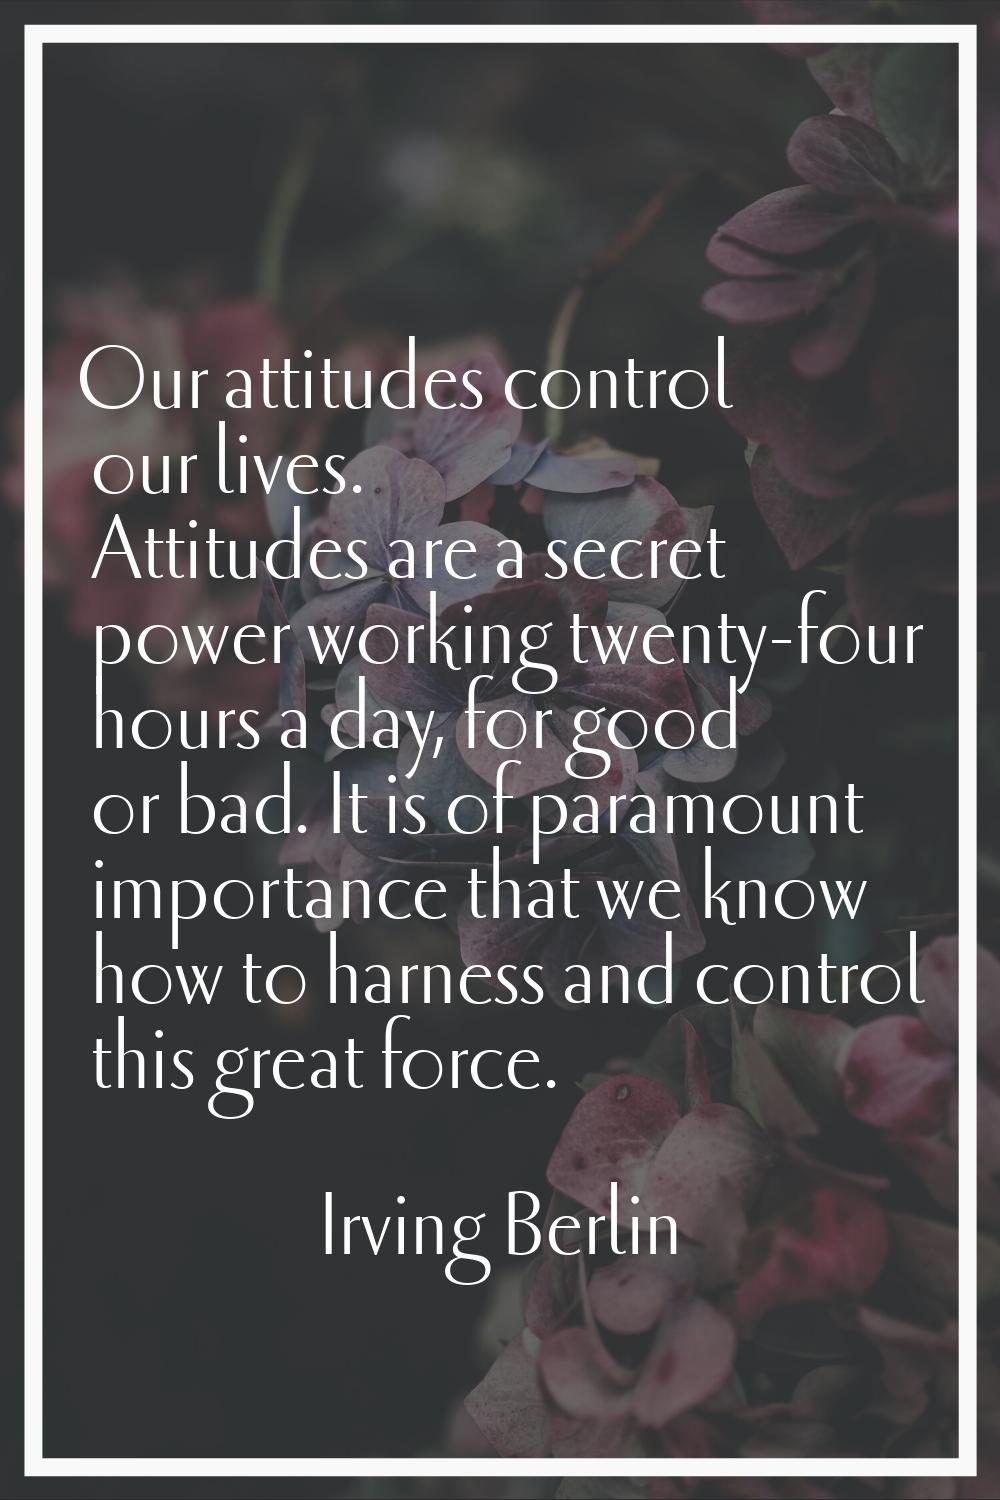 Our attitudes control our lives. Attitudes are a secret power working twenty-four hours a day, for 